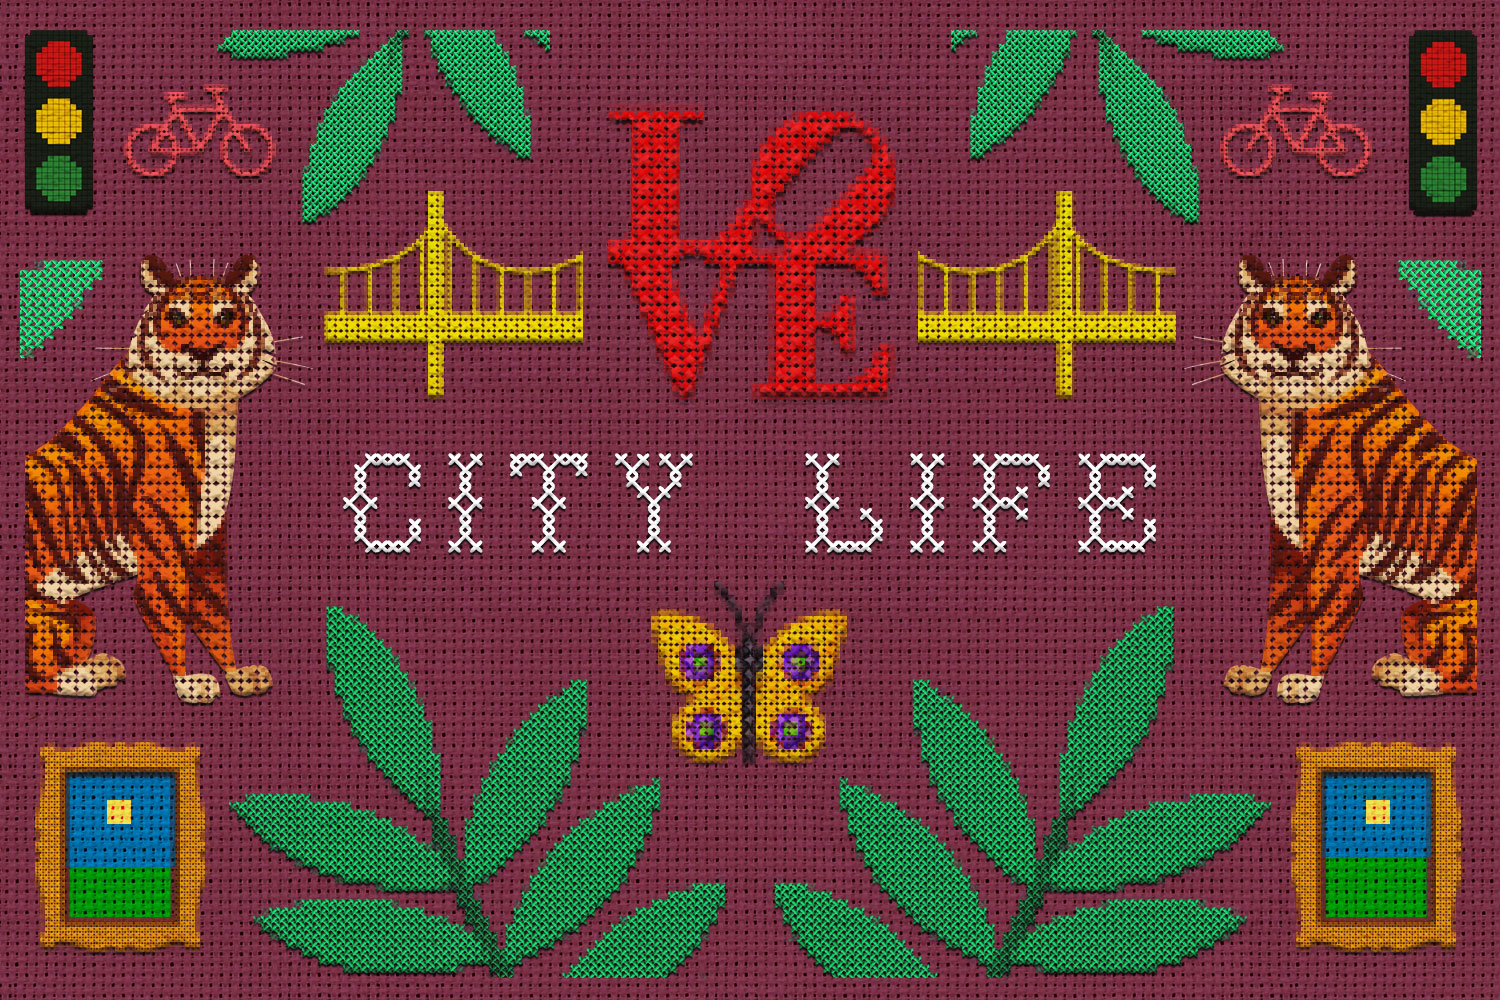 city-life